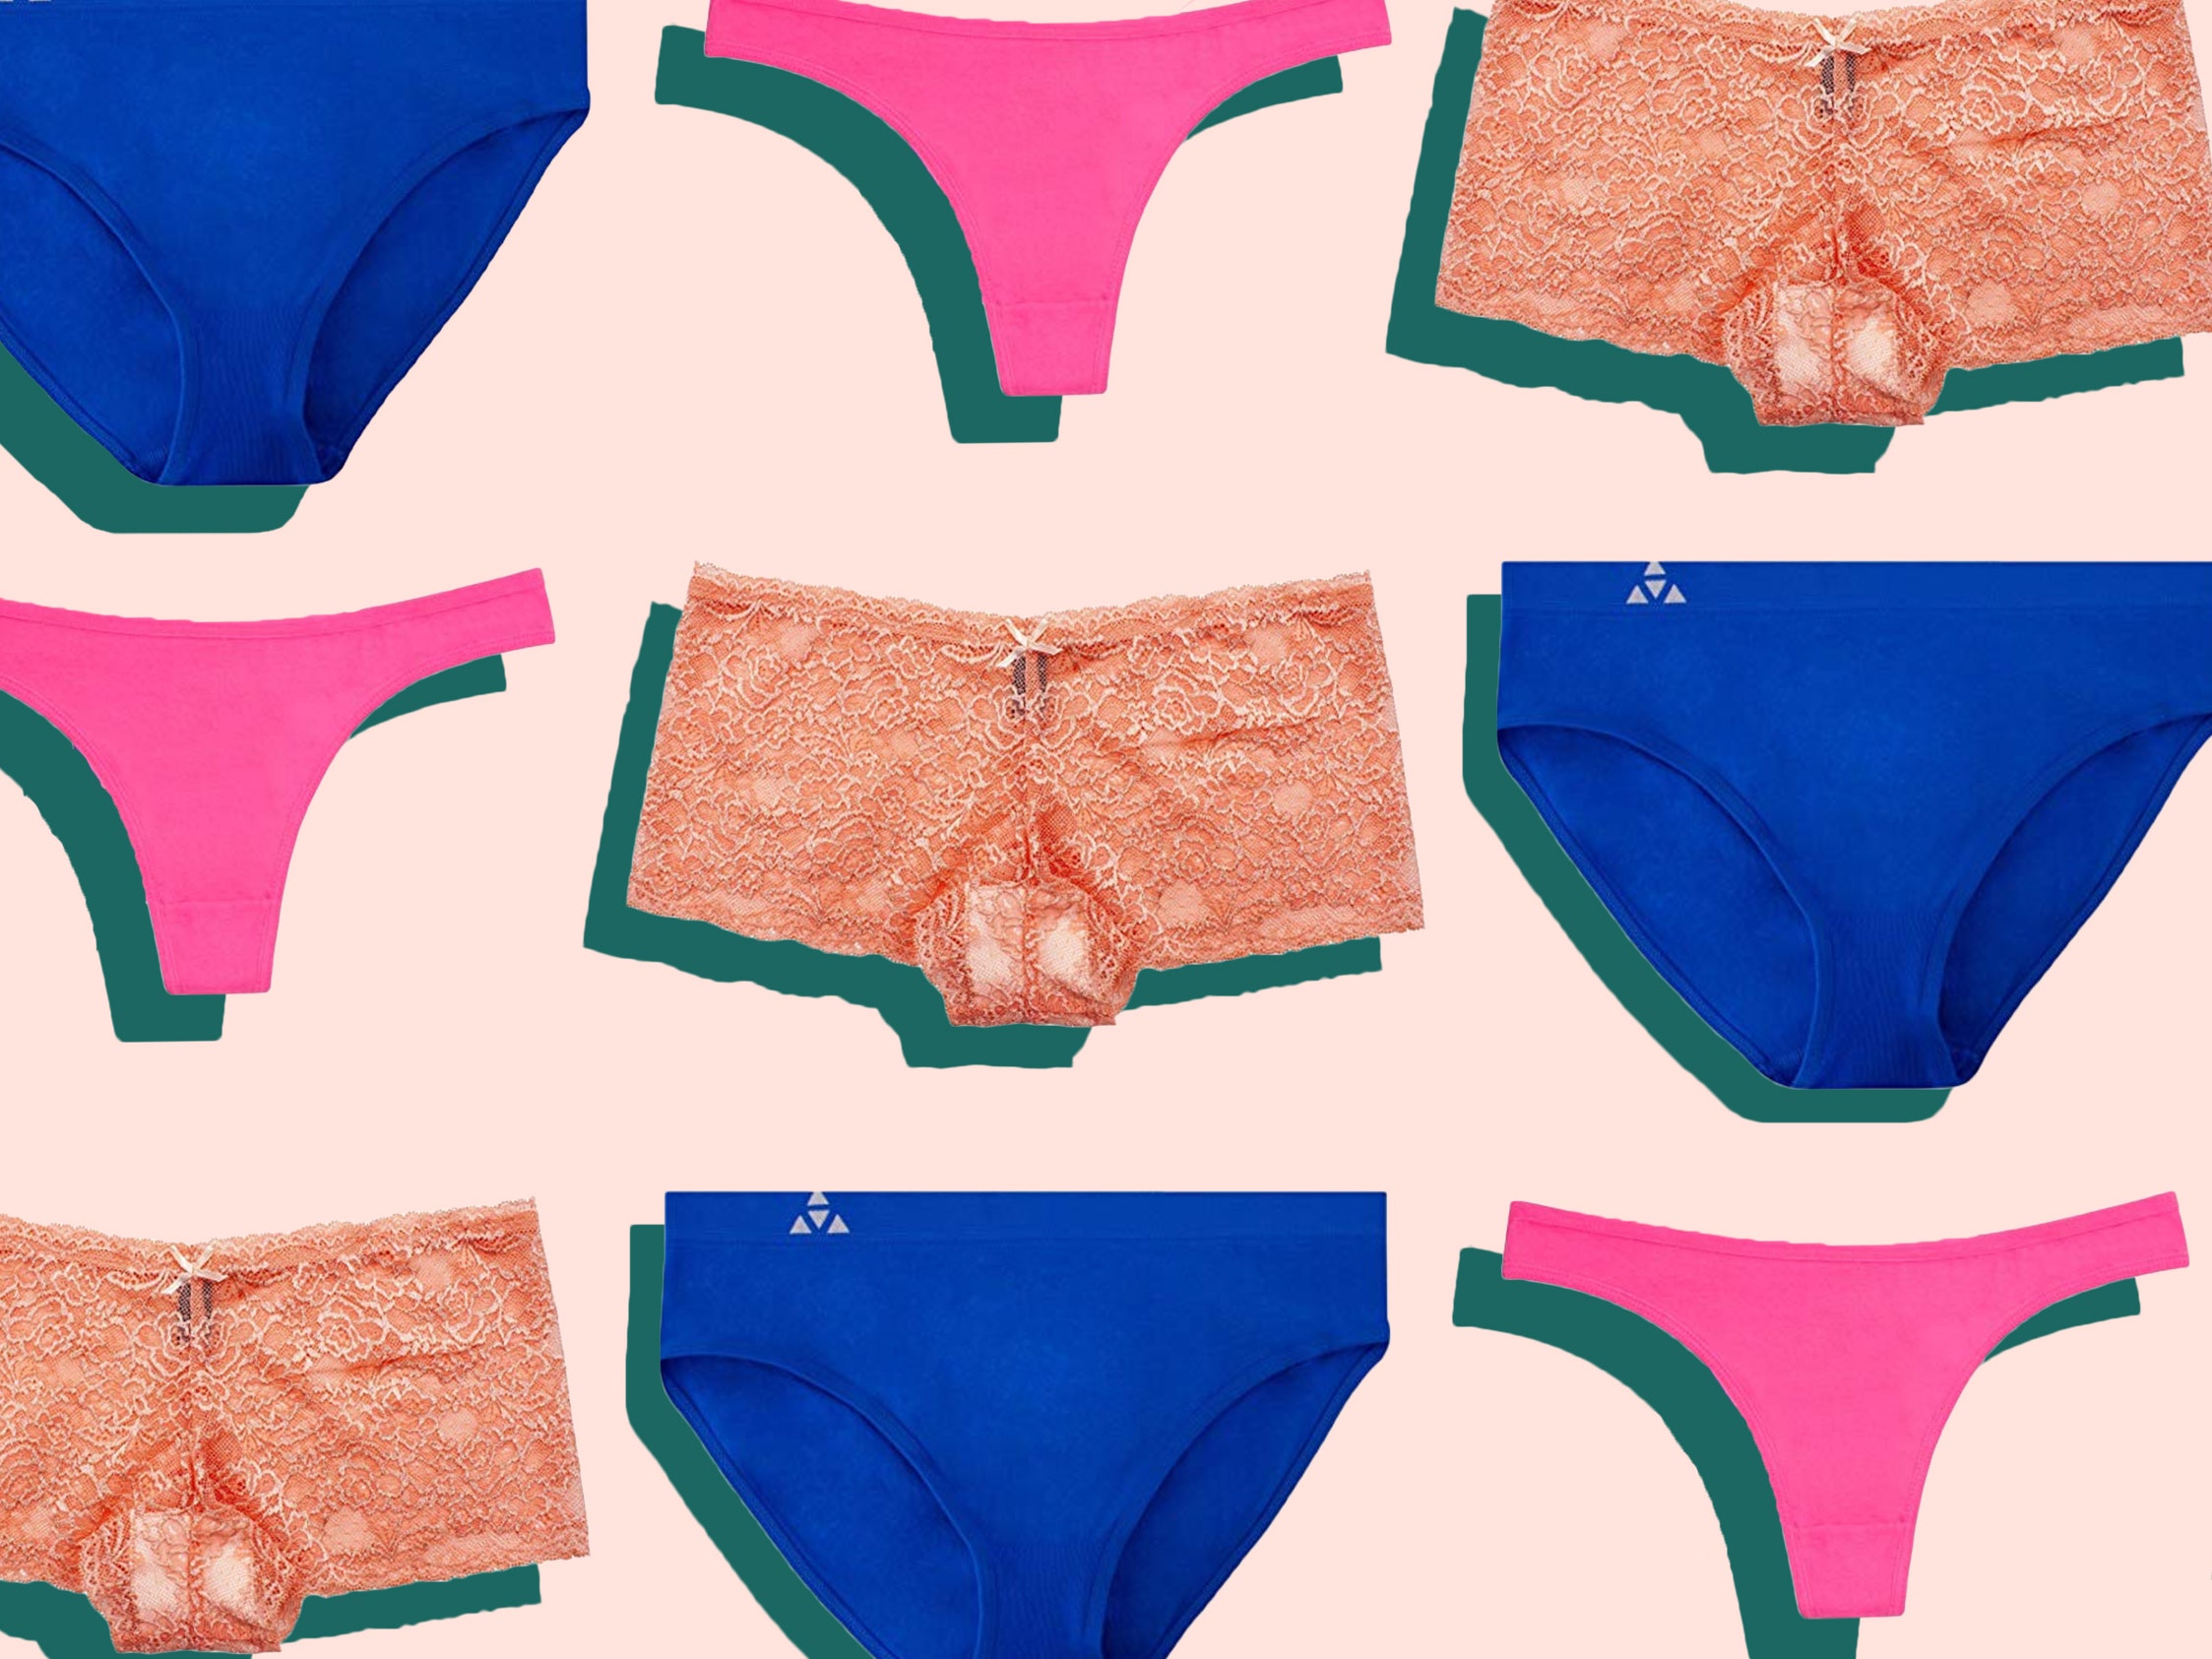 deb erdmann recommends Pics Of Underwear